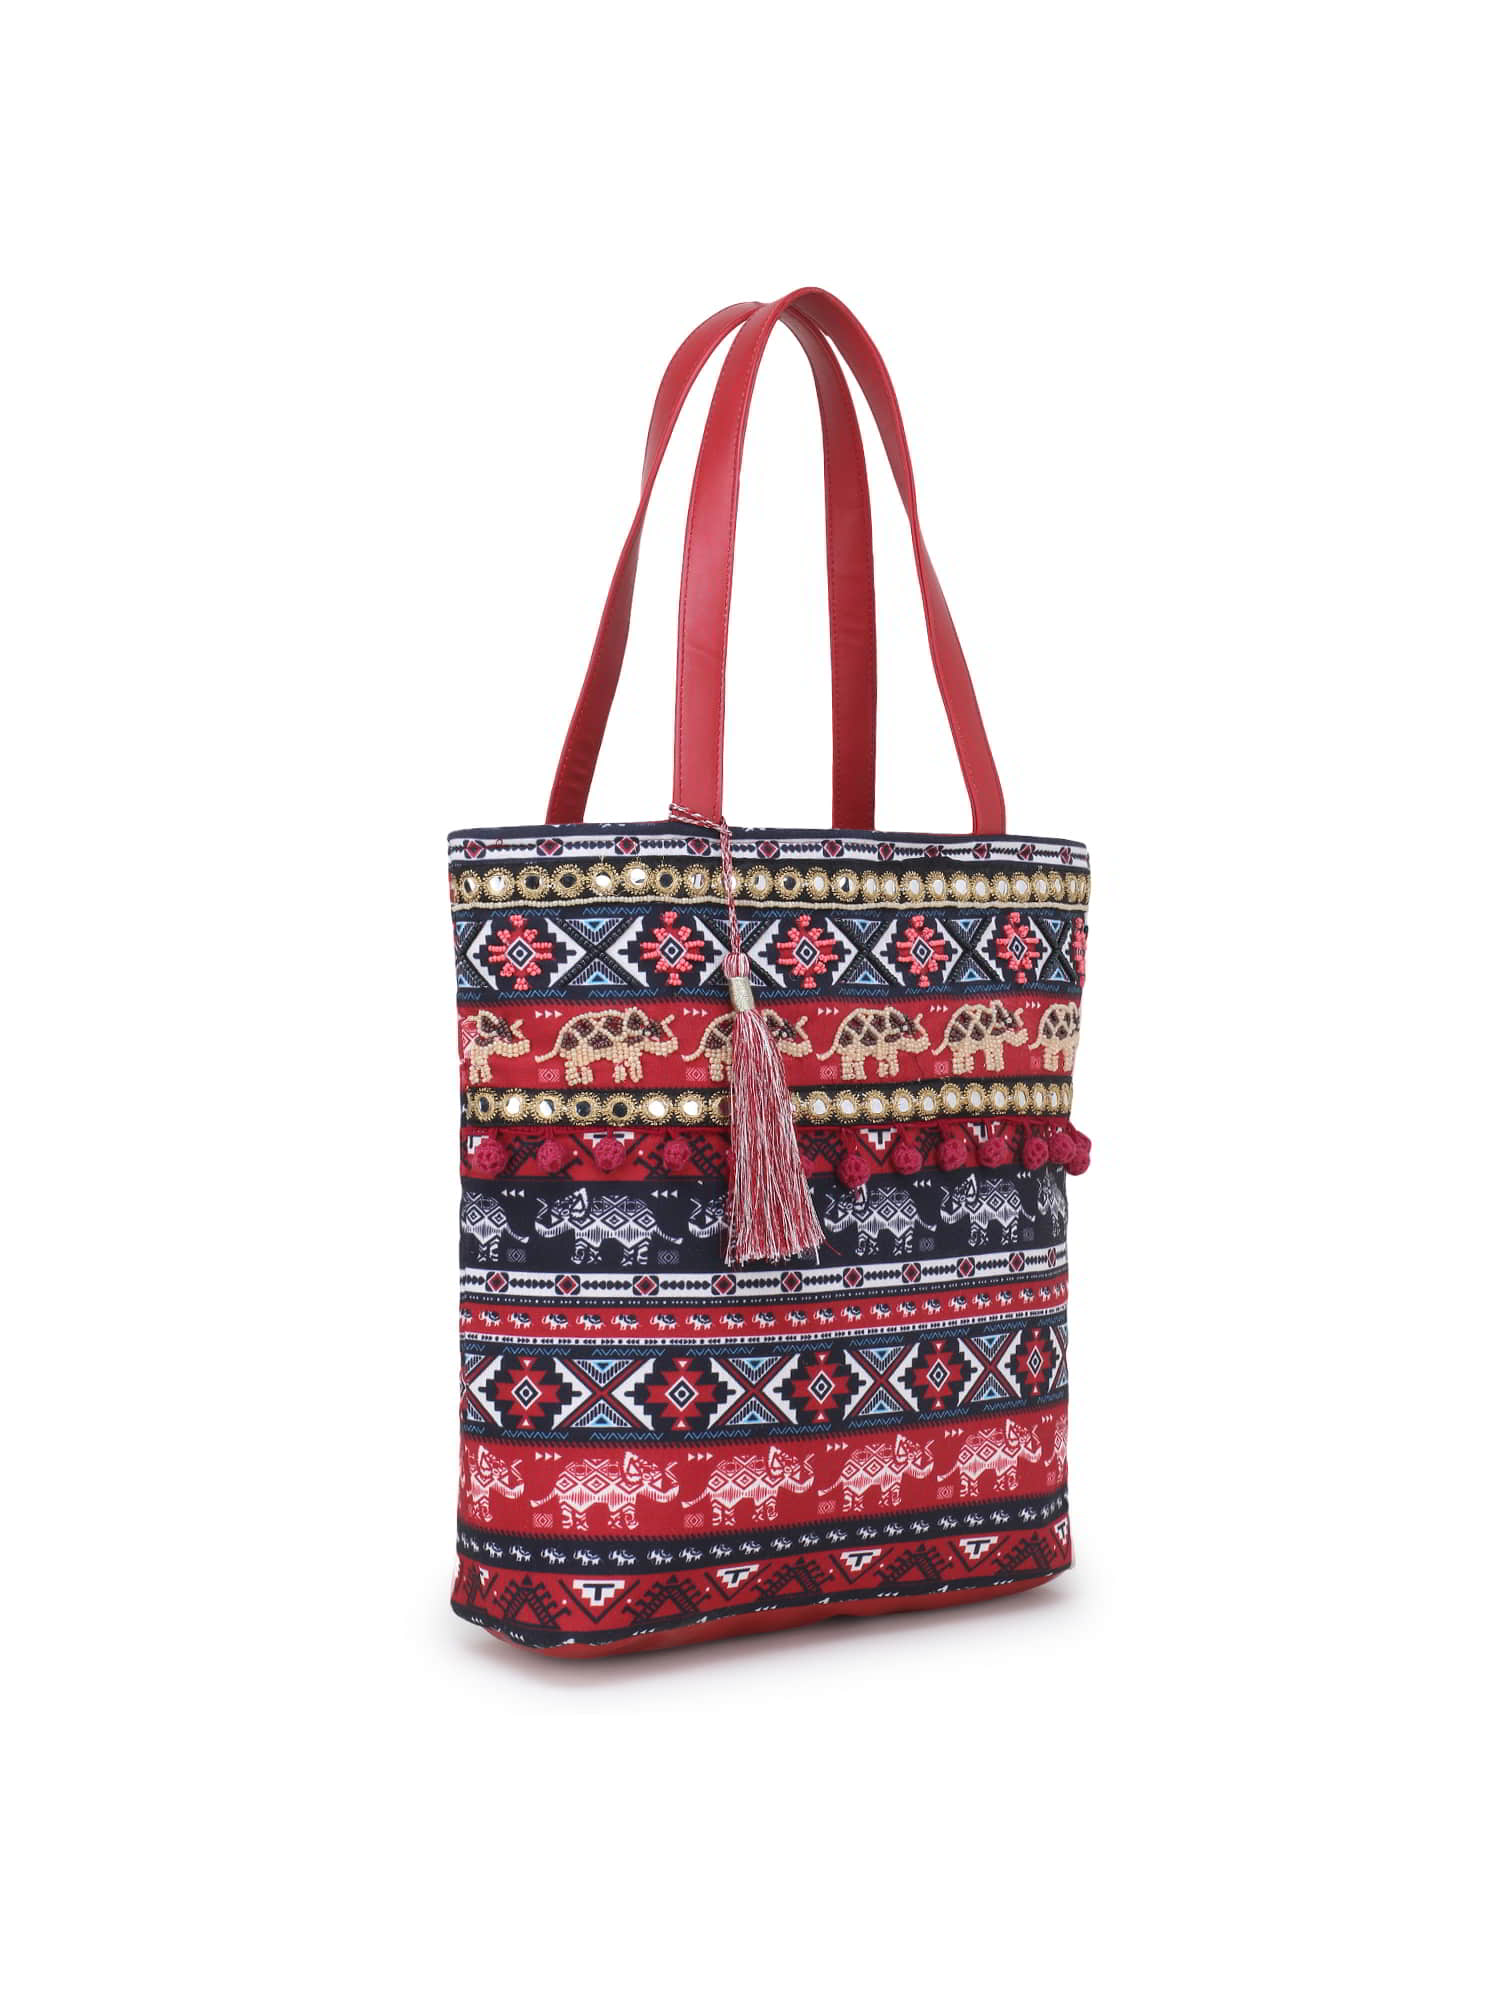 Boho Ethnic Printed Canvas Embellished Tote Bag With Tassel